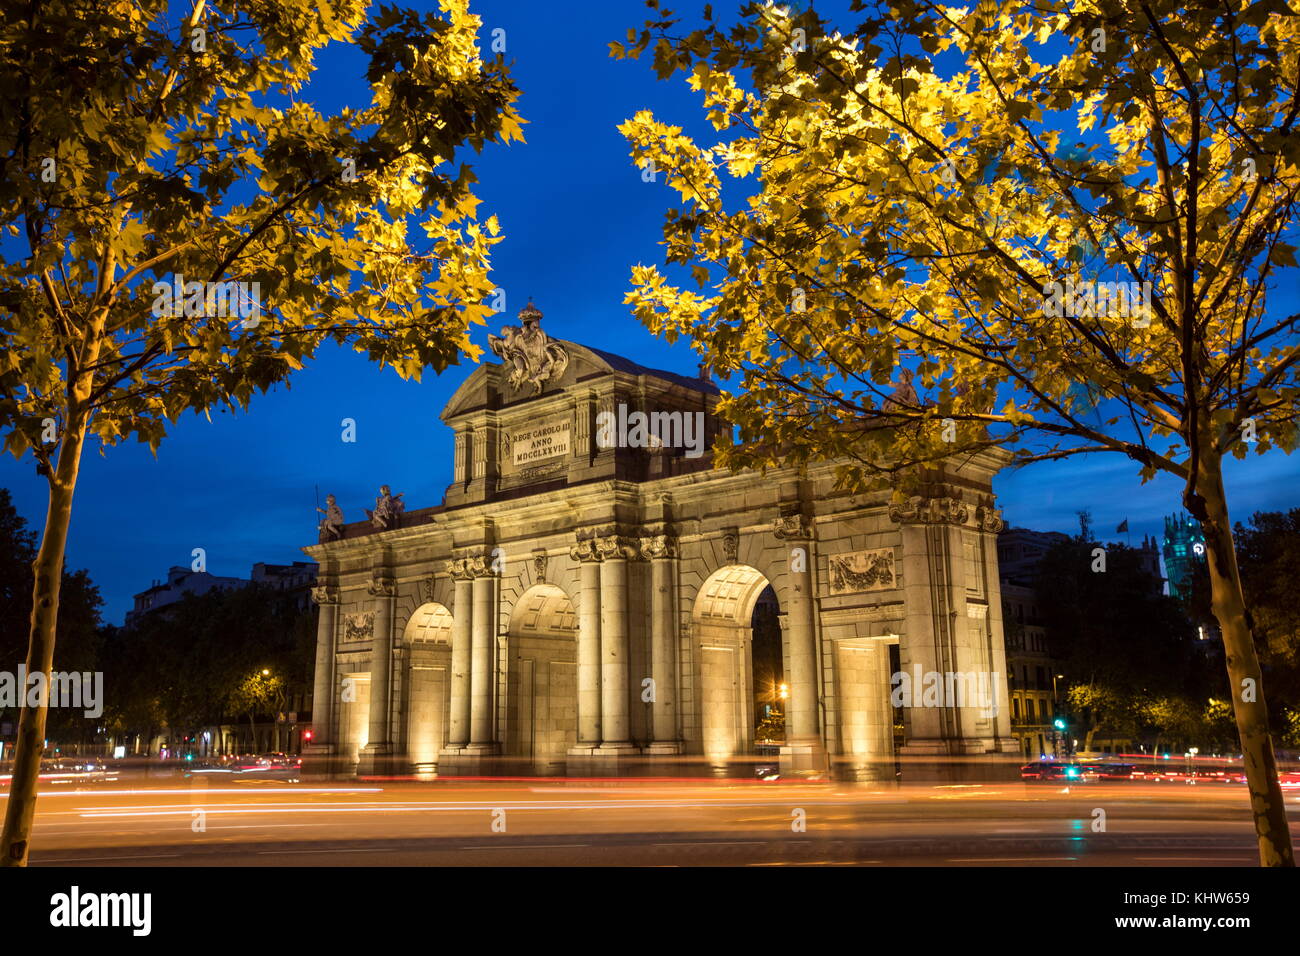 Puerta de Alcala illuminated at night, Madrid, Spain Stock Photo